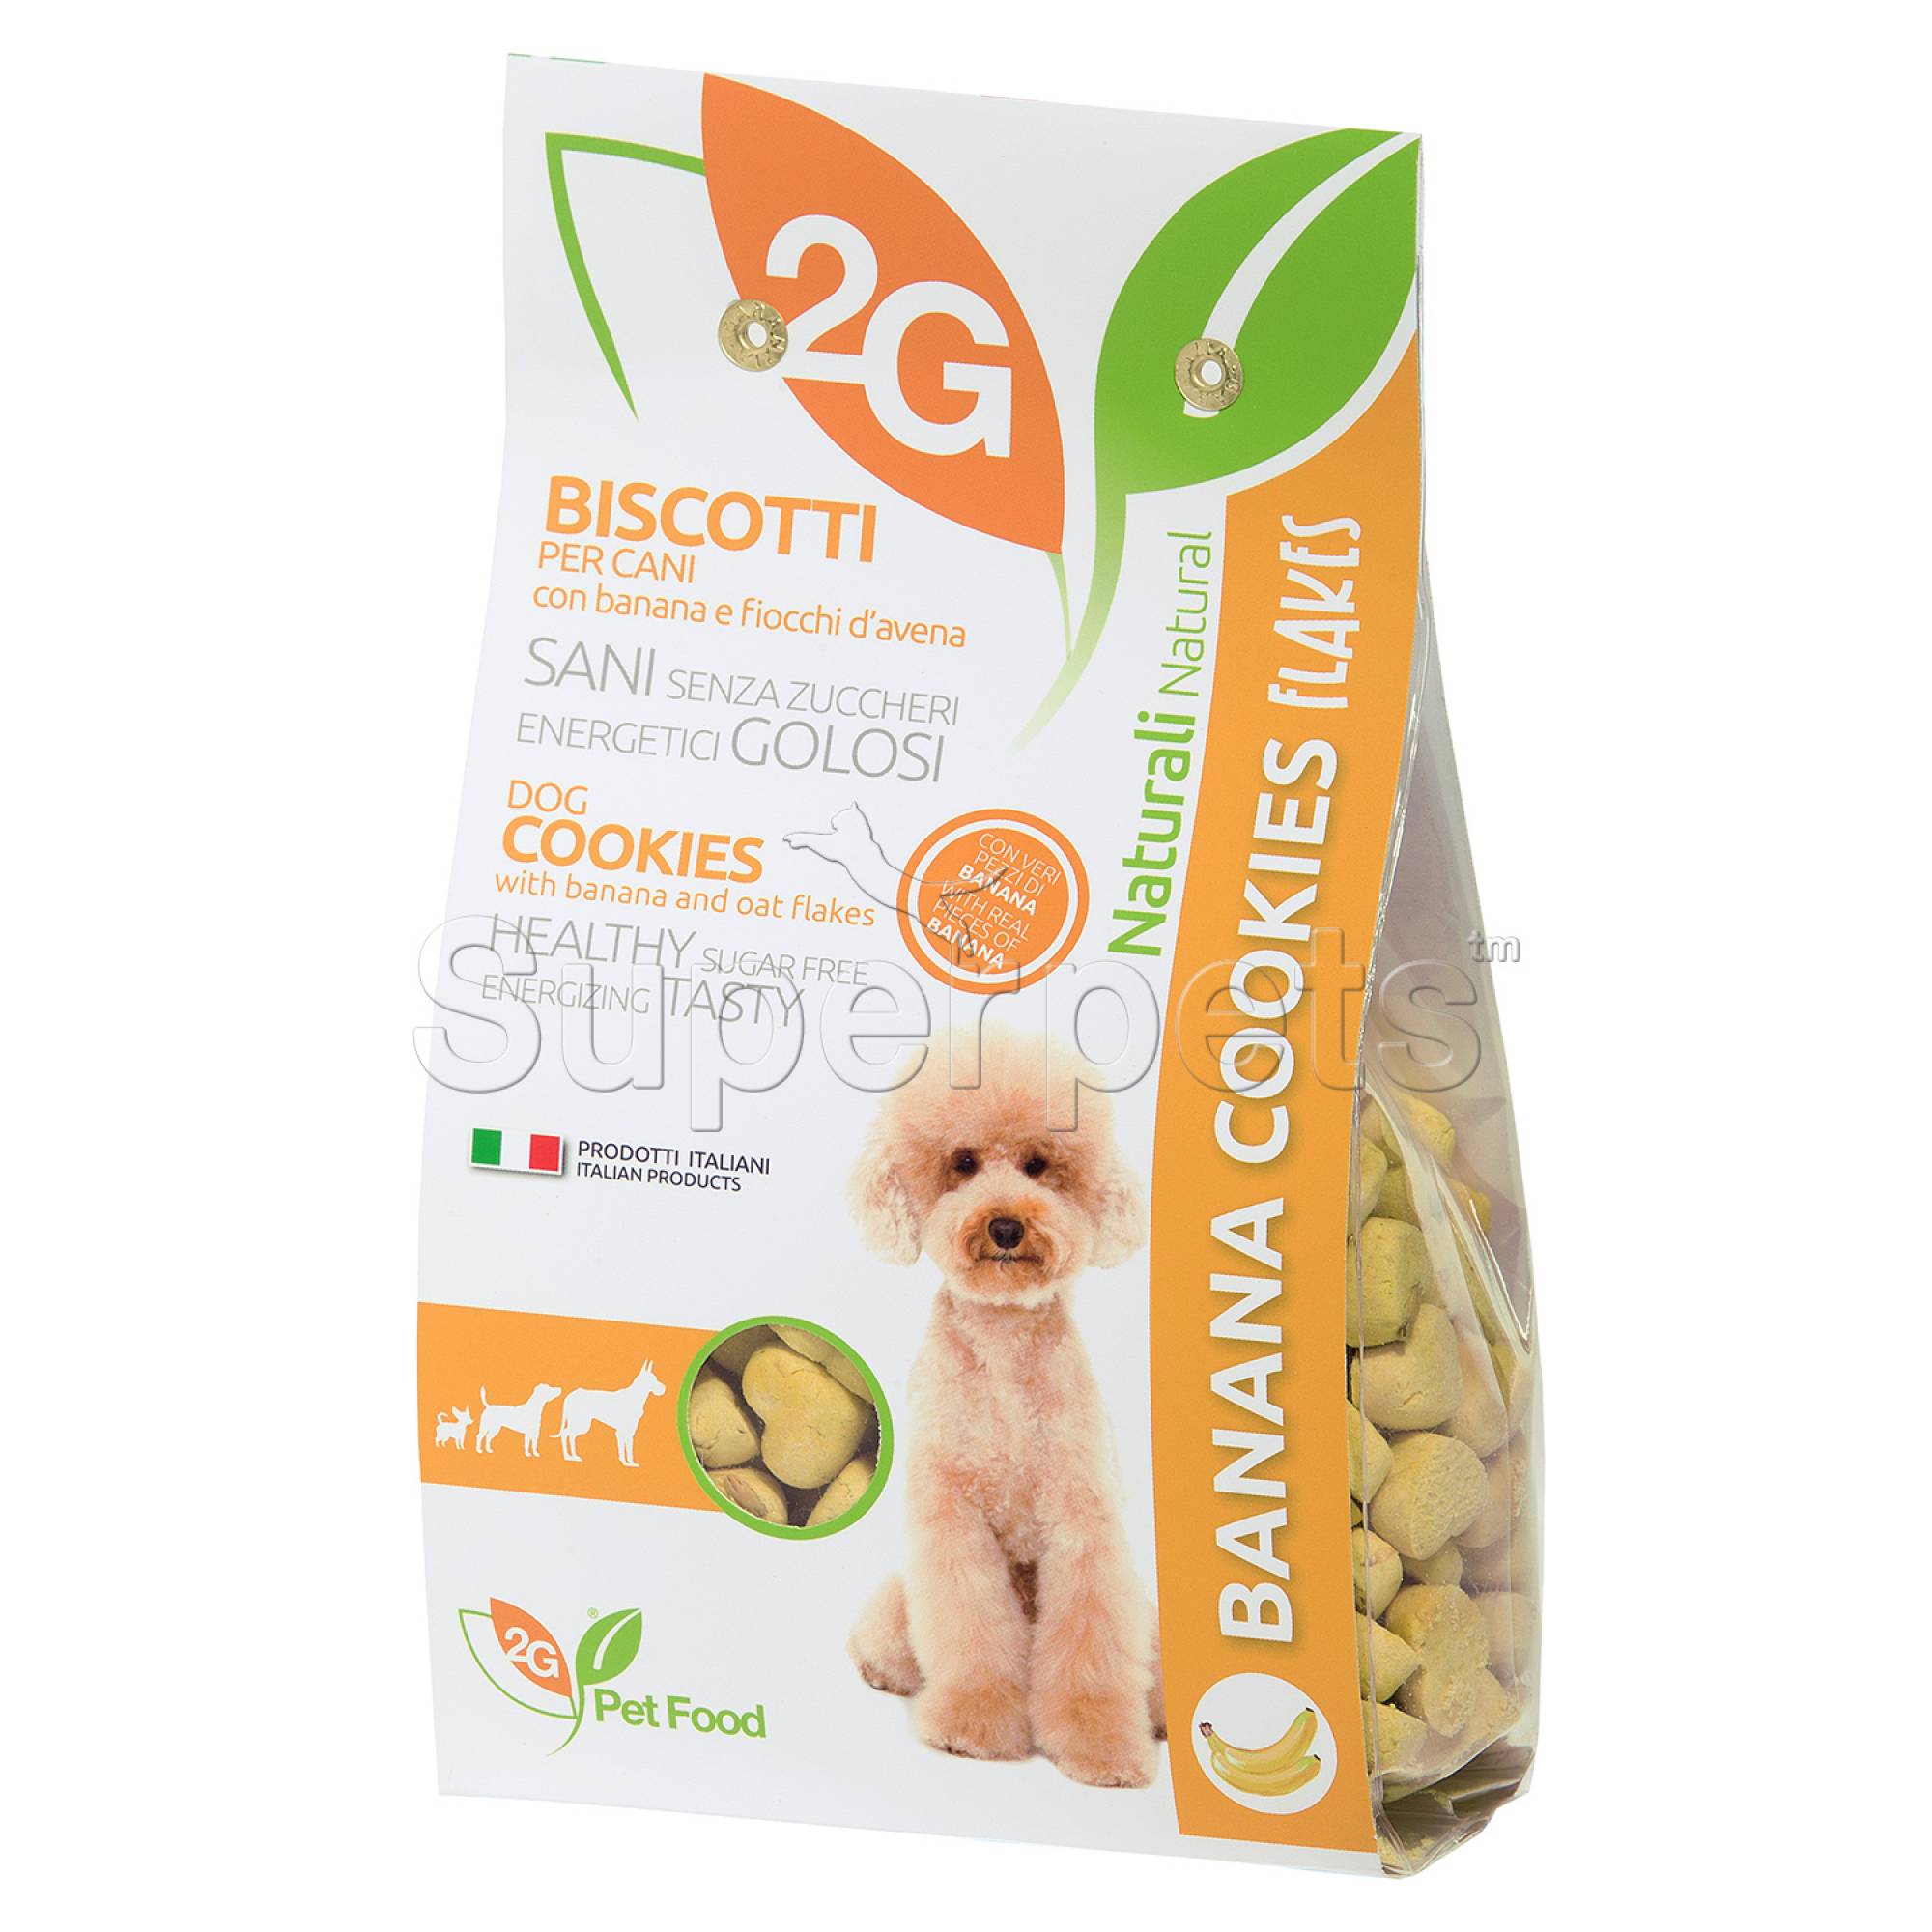 2G Pet Food - Banana & Oat Dog Cookies 350g